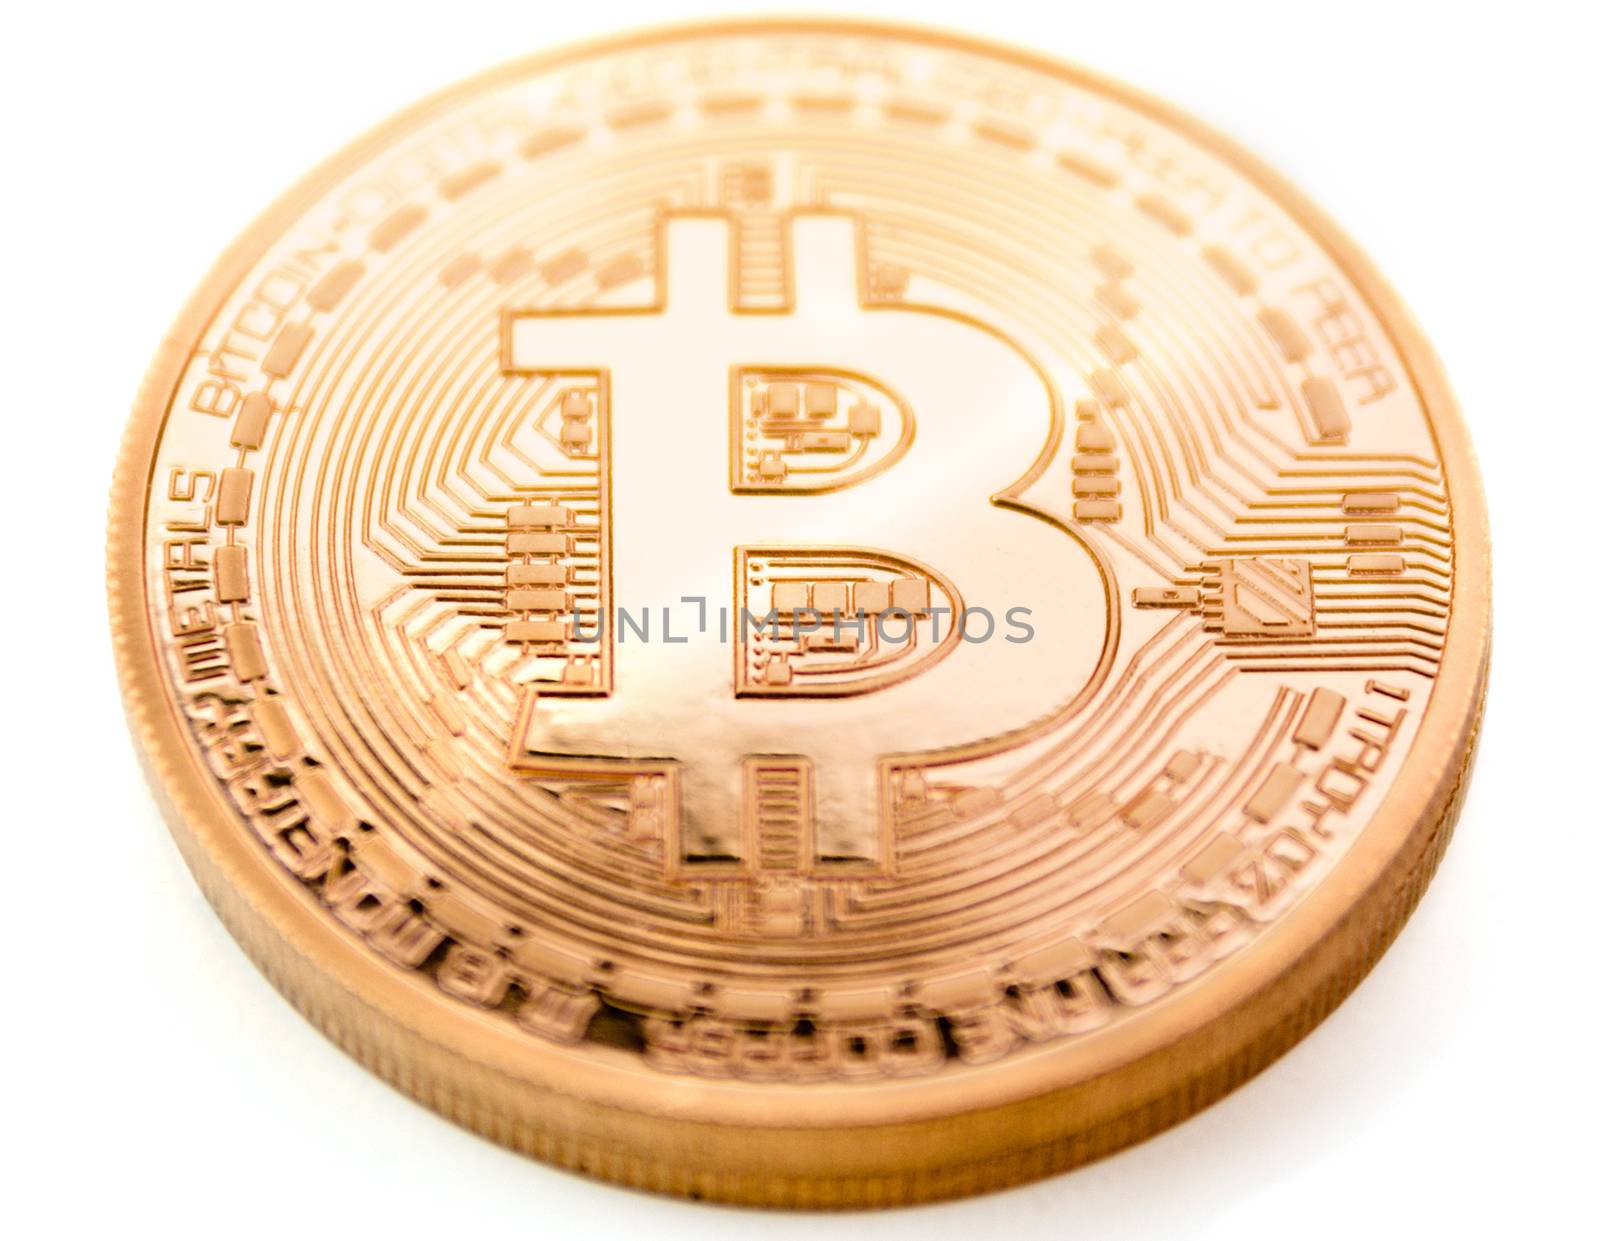 frontside of a bitcoin coin - bit coin BTC the new virtual money